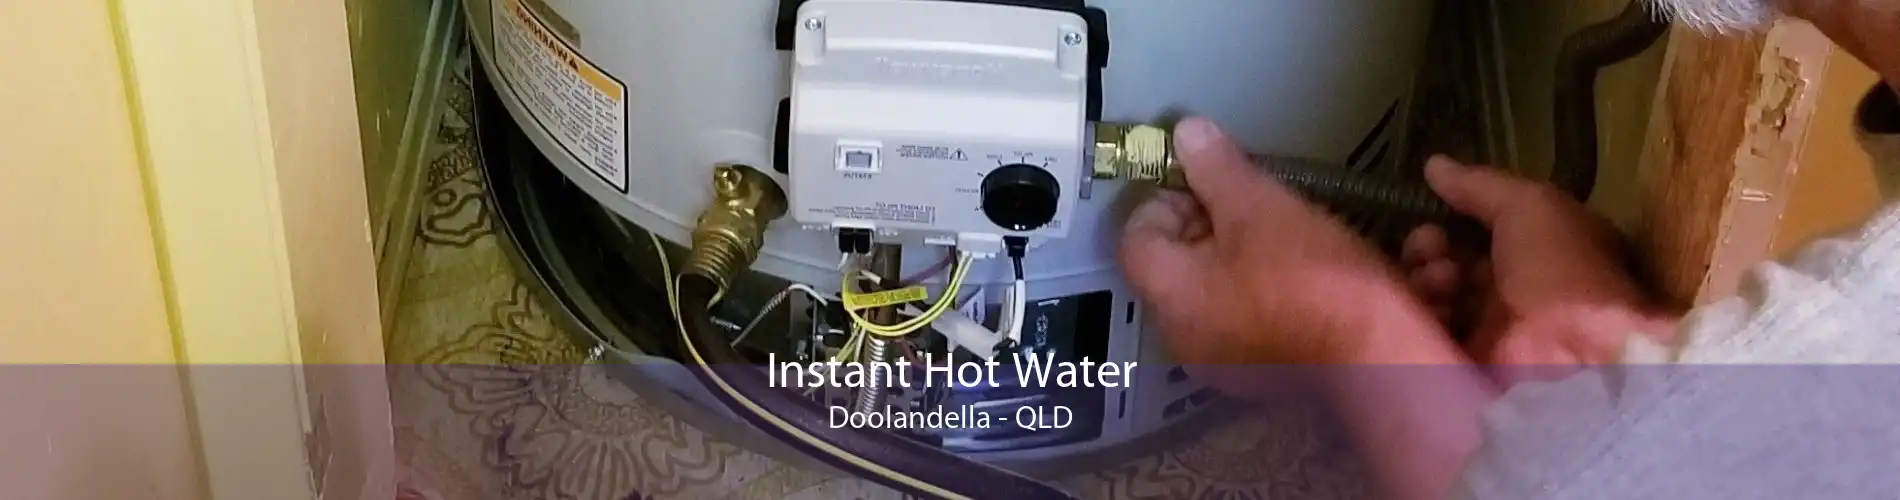 Instant Hot Water Doolandella - QLD